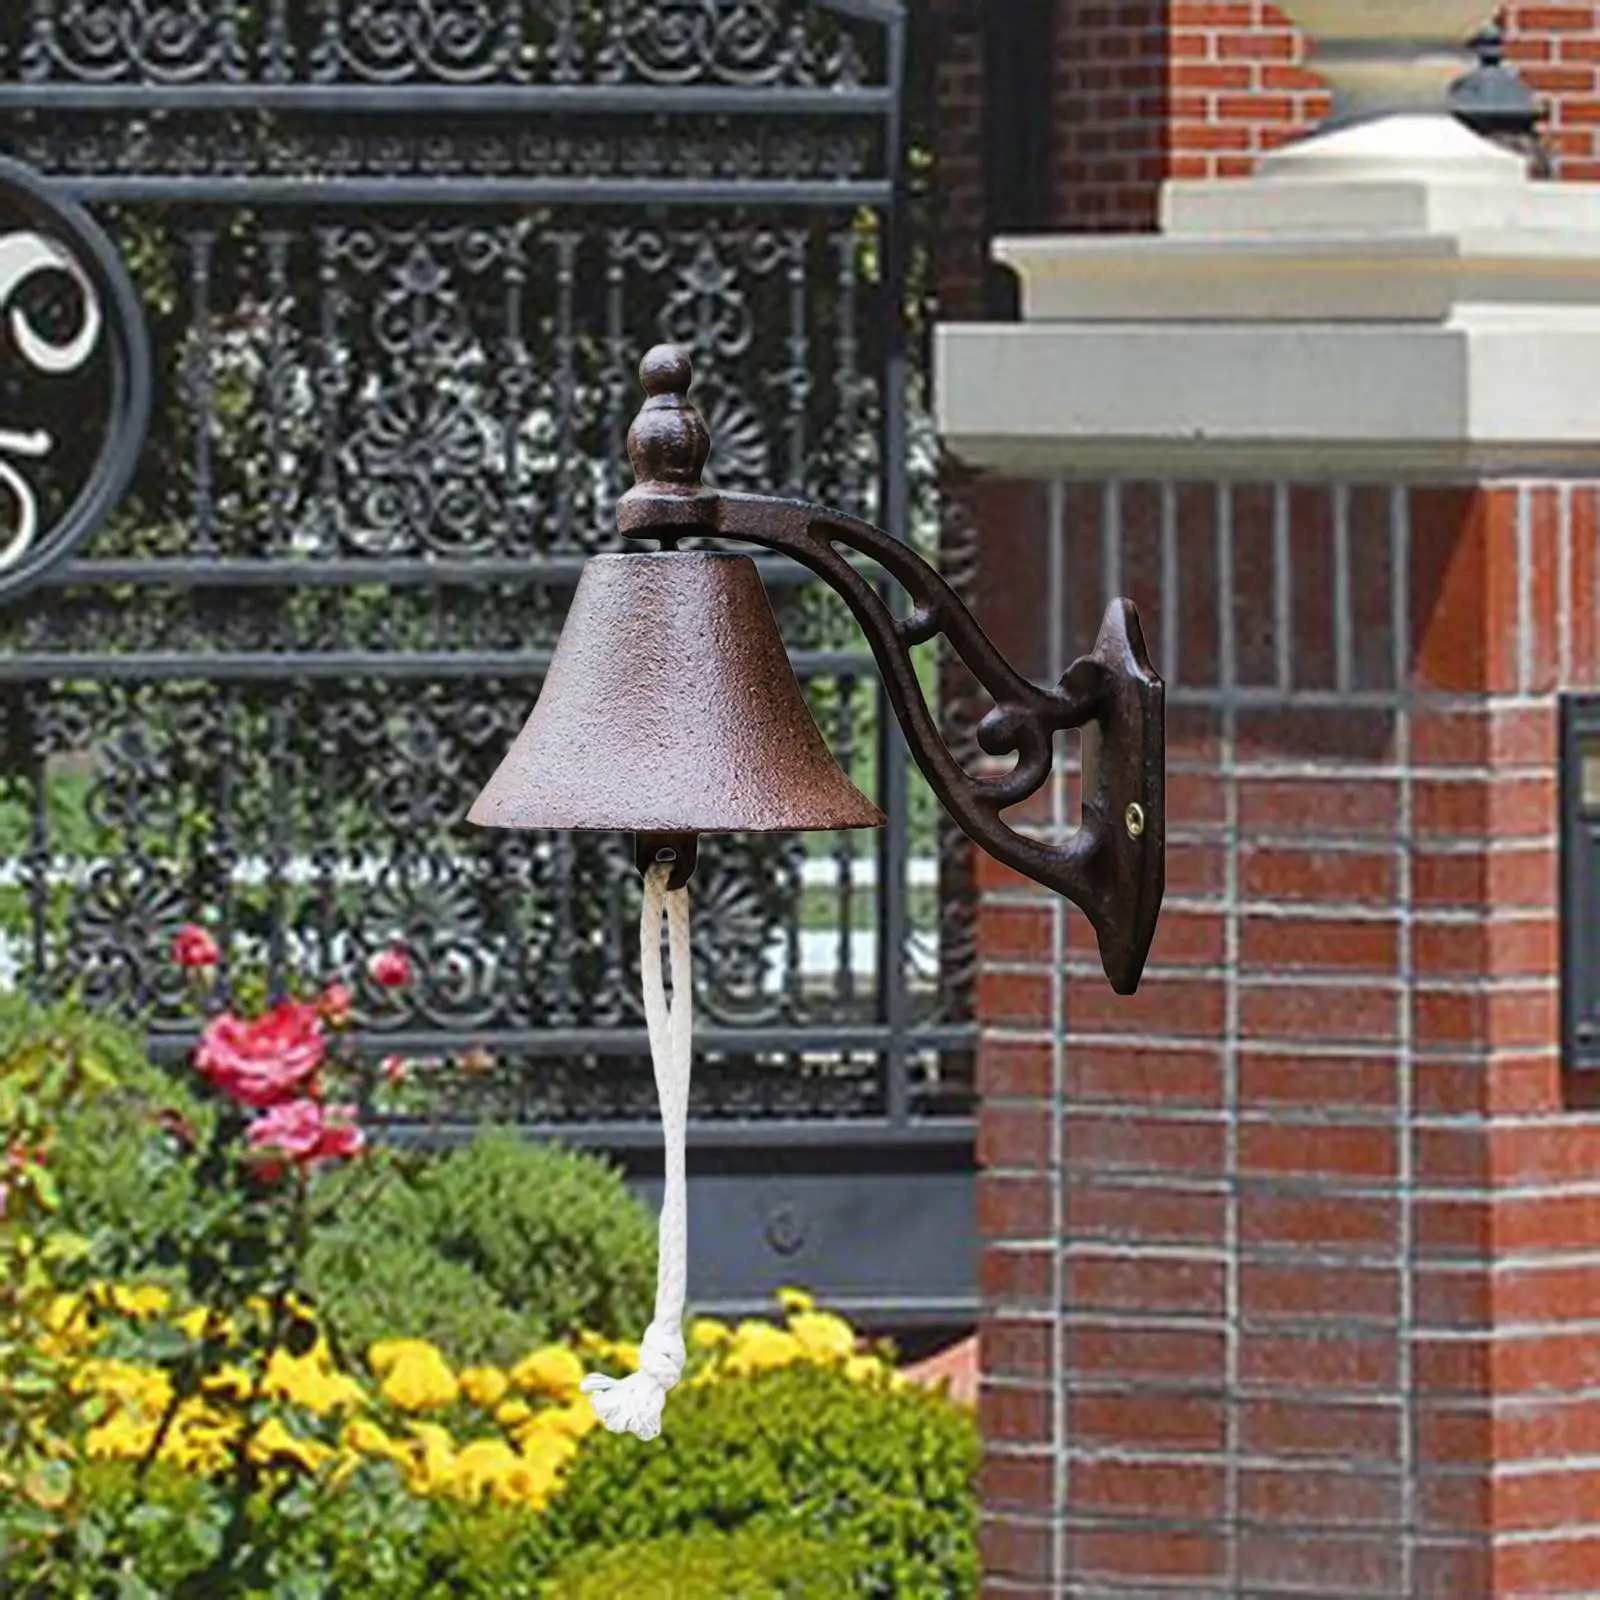 Porch Dinner Bell Garden Bells Antique Style Door Bells Wall Mounted Bells for Backyard Outside Entry Door Courtyard Reception